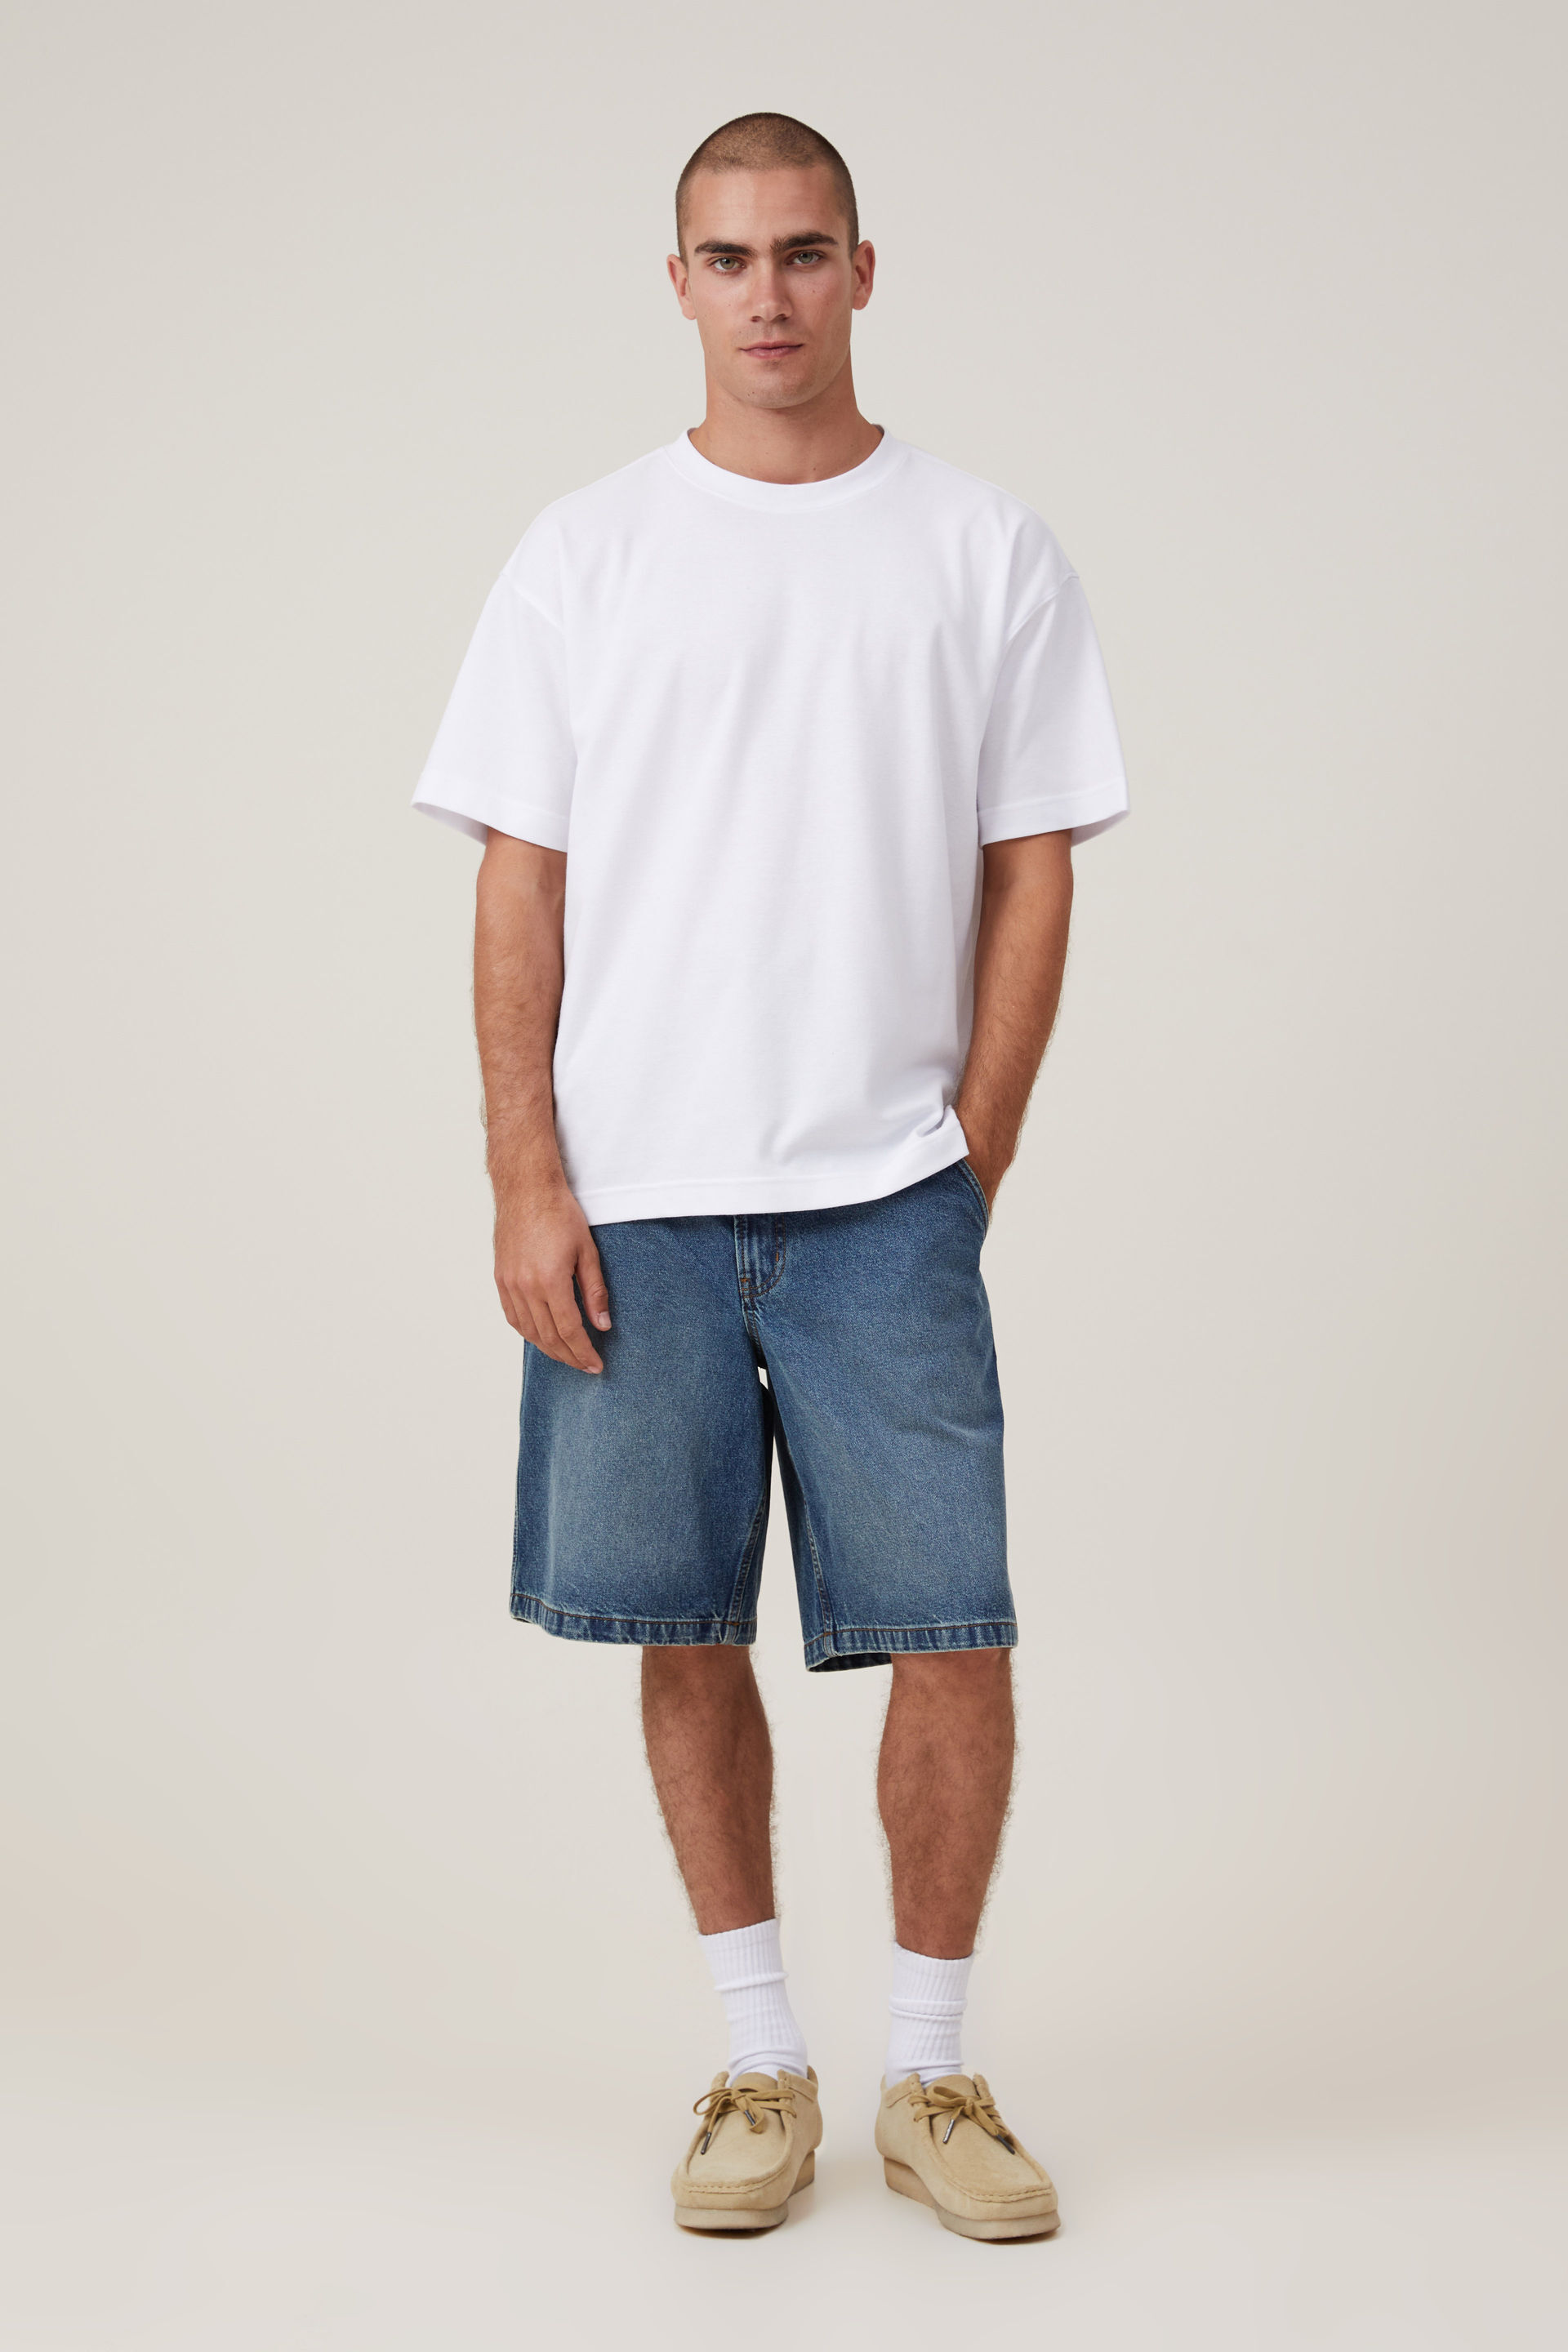 Plus Szie 44 Denim Shorts Men Summer Jeans Shorts Baggy Cargo Shorts Fashion  Streetwear Short Pants